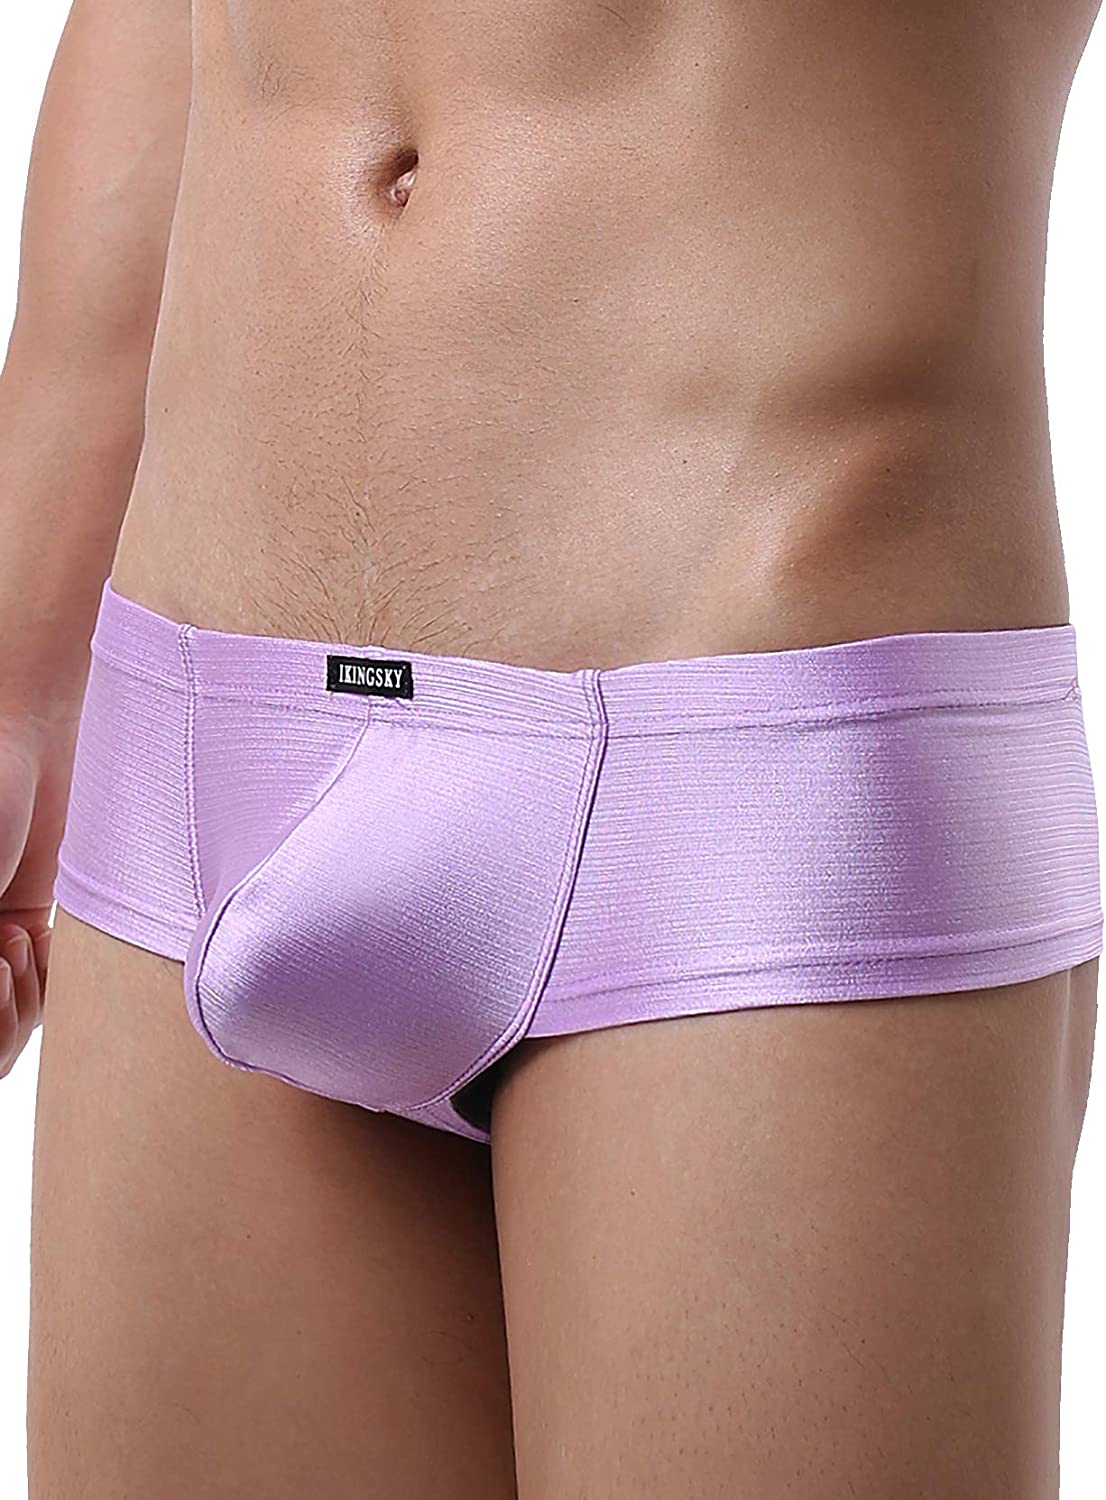 Ikingsky Men S Cheeky Thong Underwear Sexy Mini Cheek Boxer Briefs Stretch Brazi Ebay